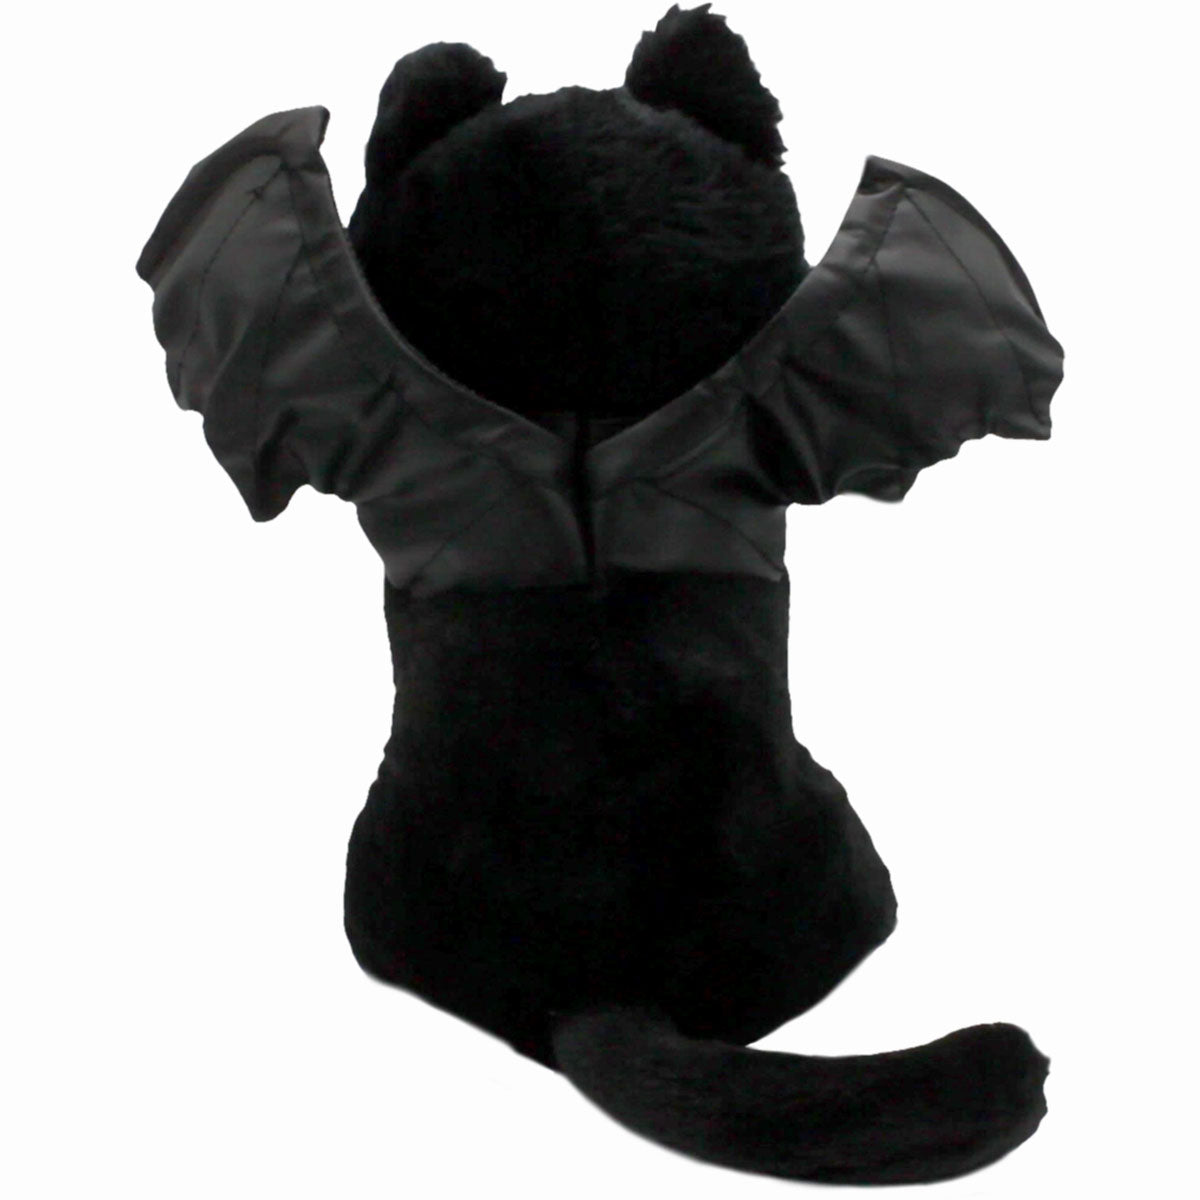 BAT CAT - Skrzydlata kolekcjonerska miękka pluszowa zabawka 12 cali